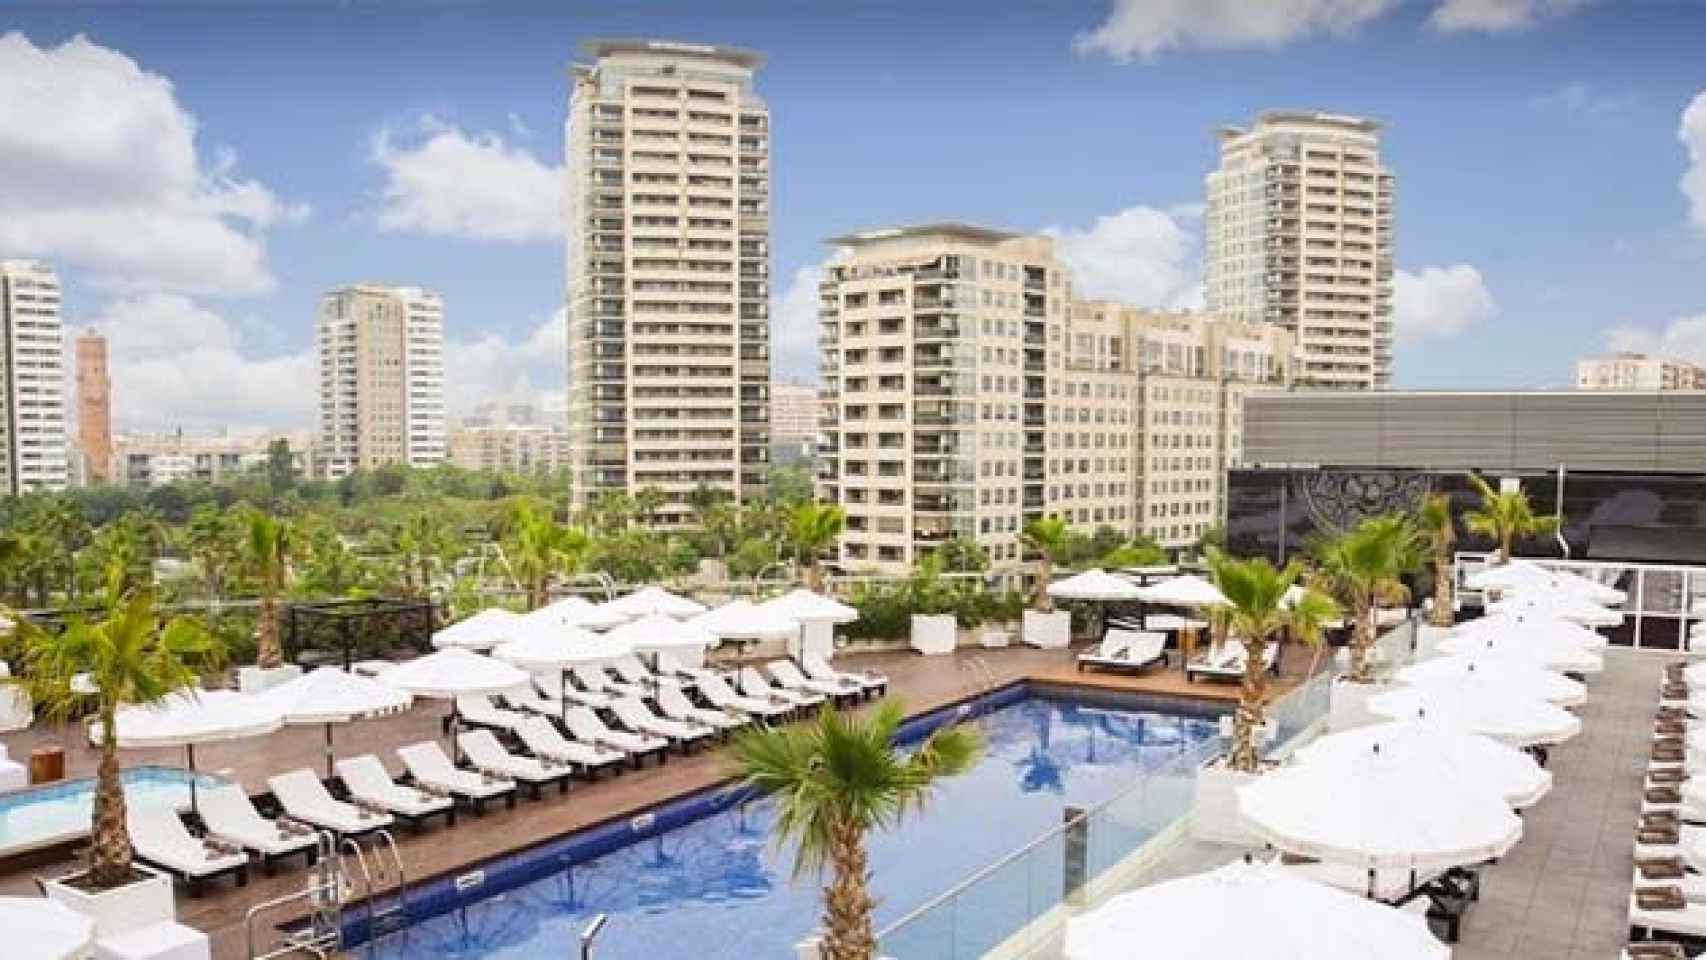 Hotel Hilton Diagonal Mar de Barcelona, reconocido como mejor hotel de negocios de Europa / Google